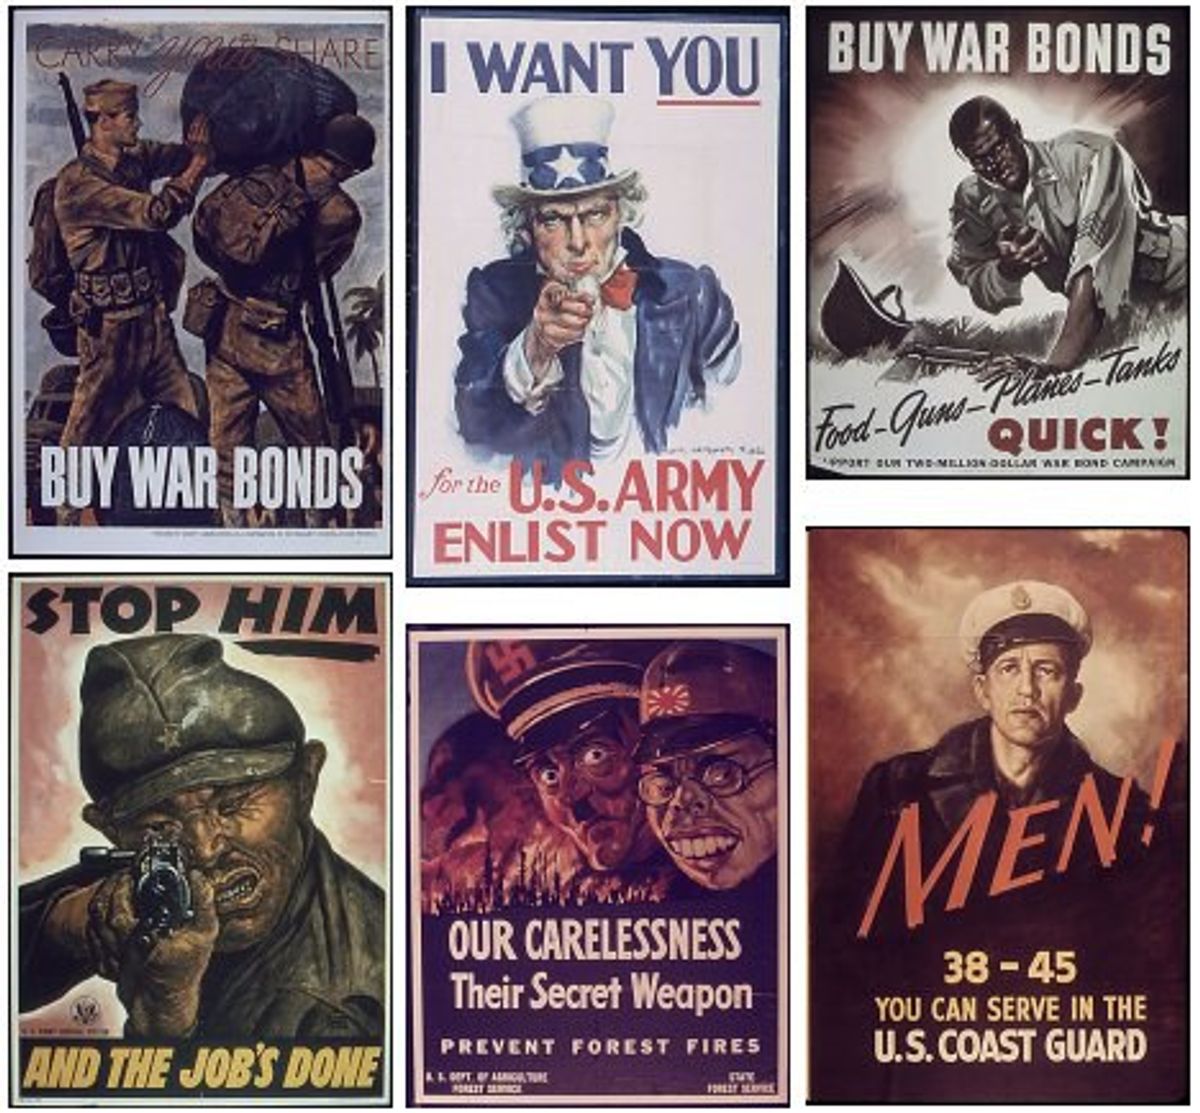 6 Reasons Why World War II Reenacting Is Awesome